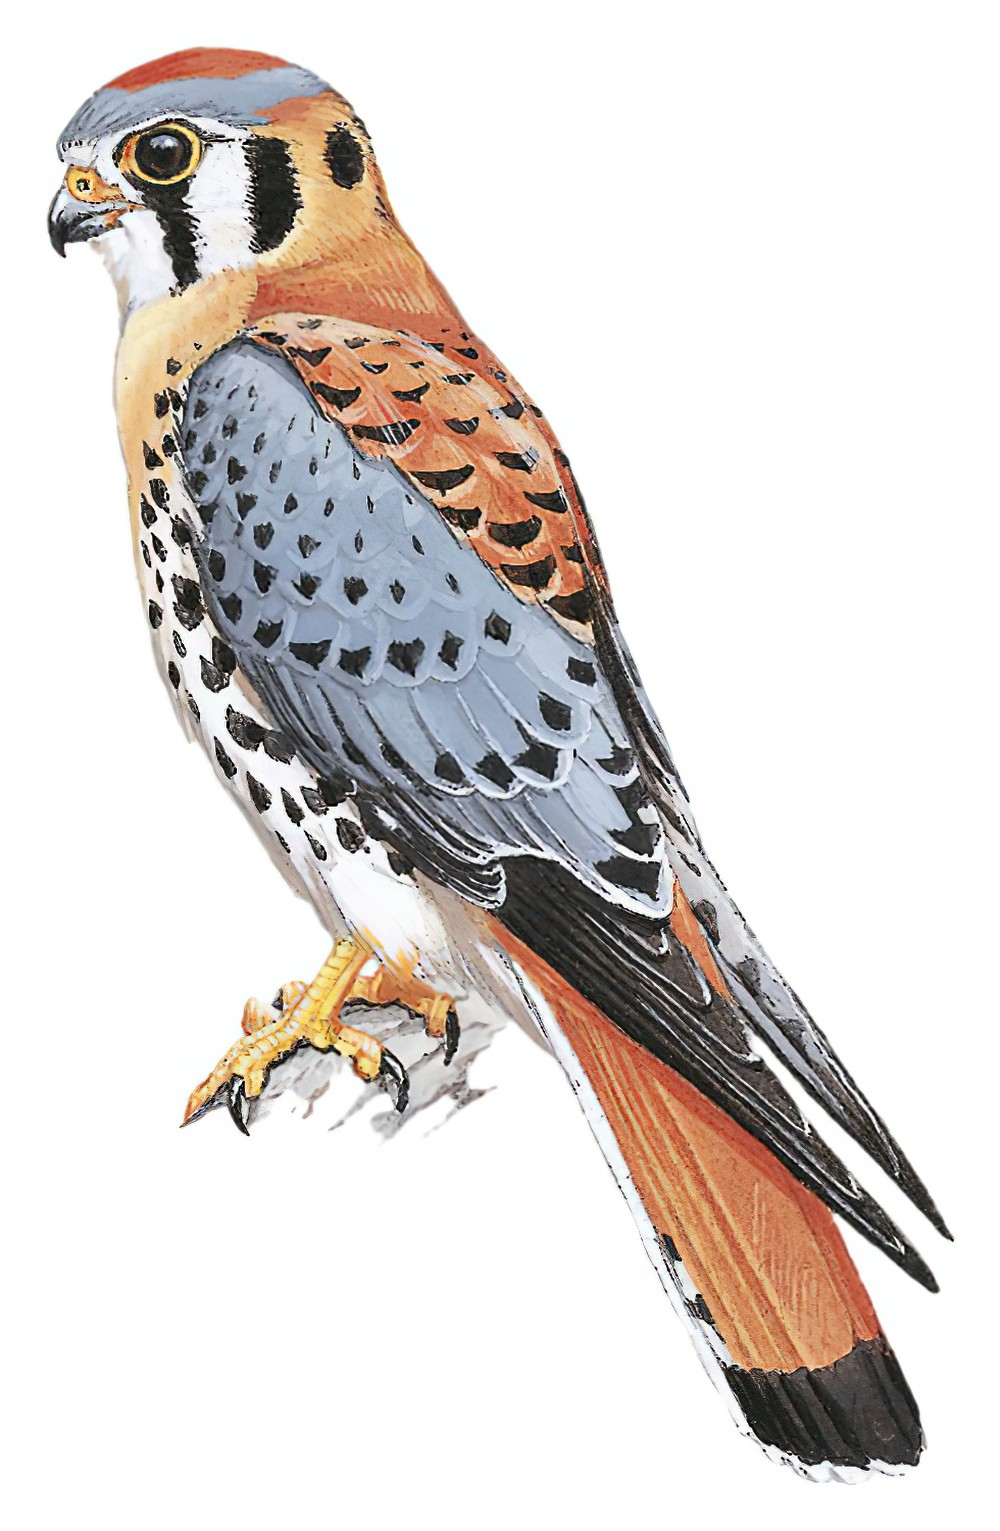 American Kestrel / Falco sparverius